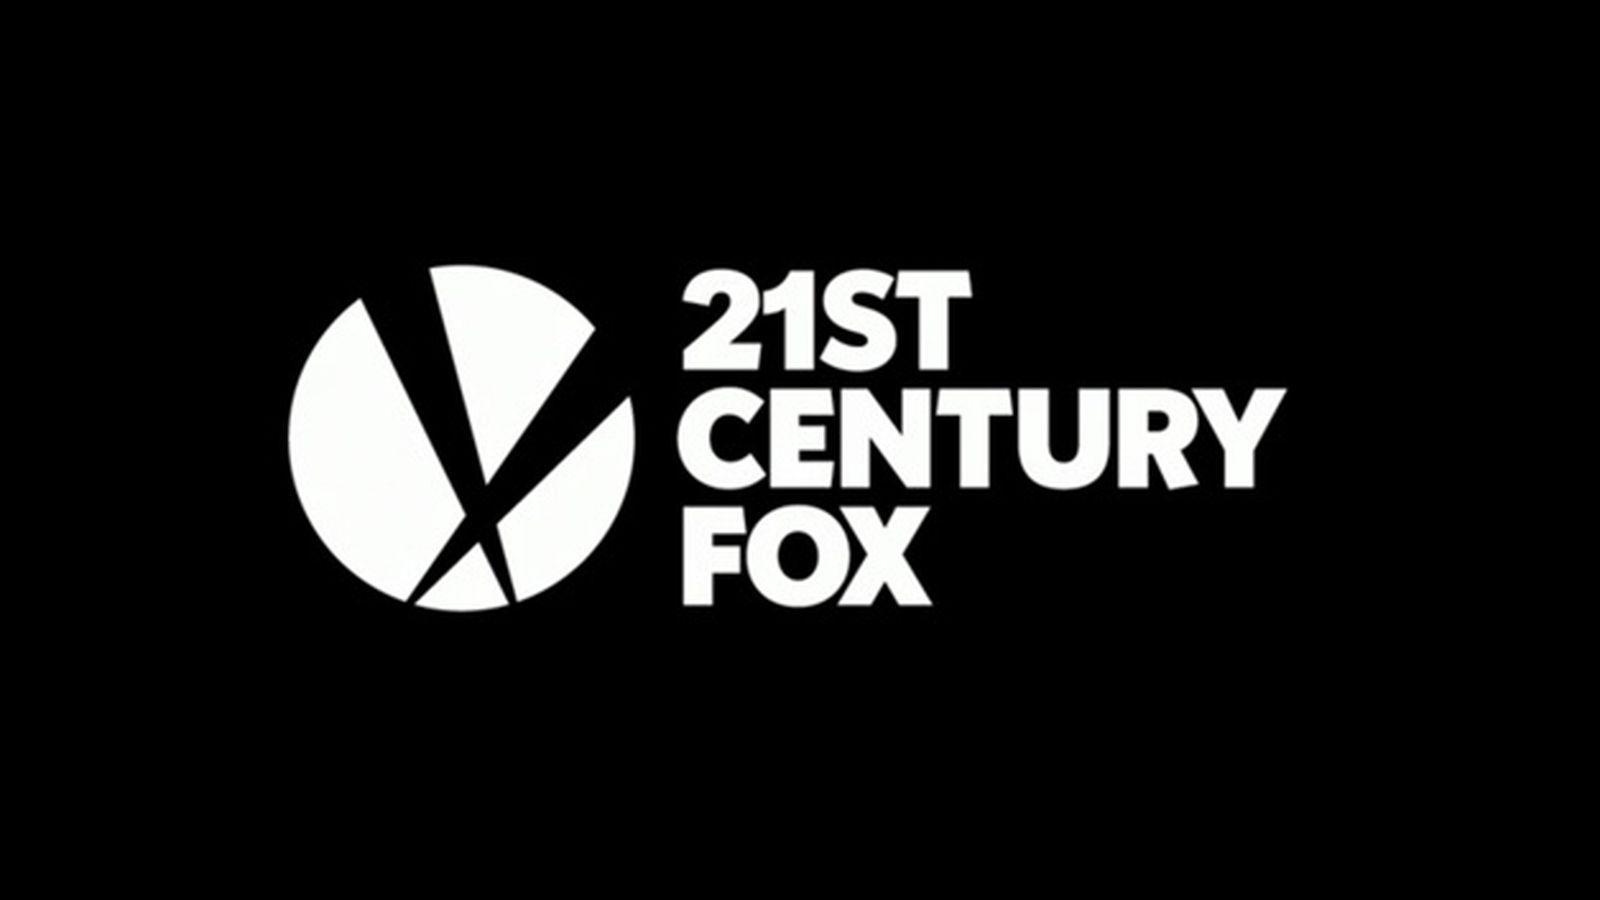 20 Century Fox Logo - 21st Century Fox logo unveiled ahead of News Corp split - The Verge